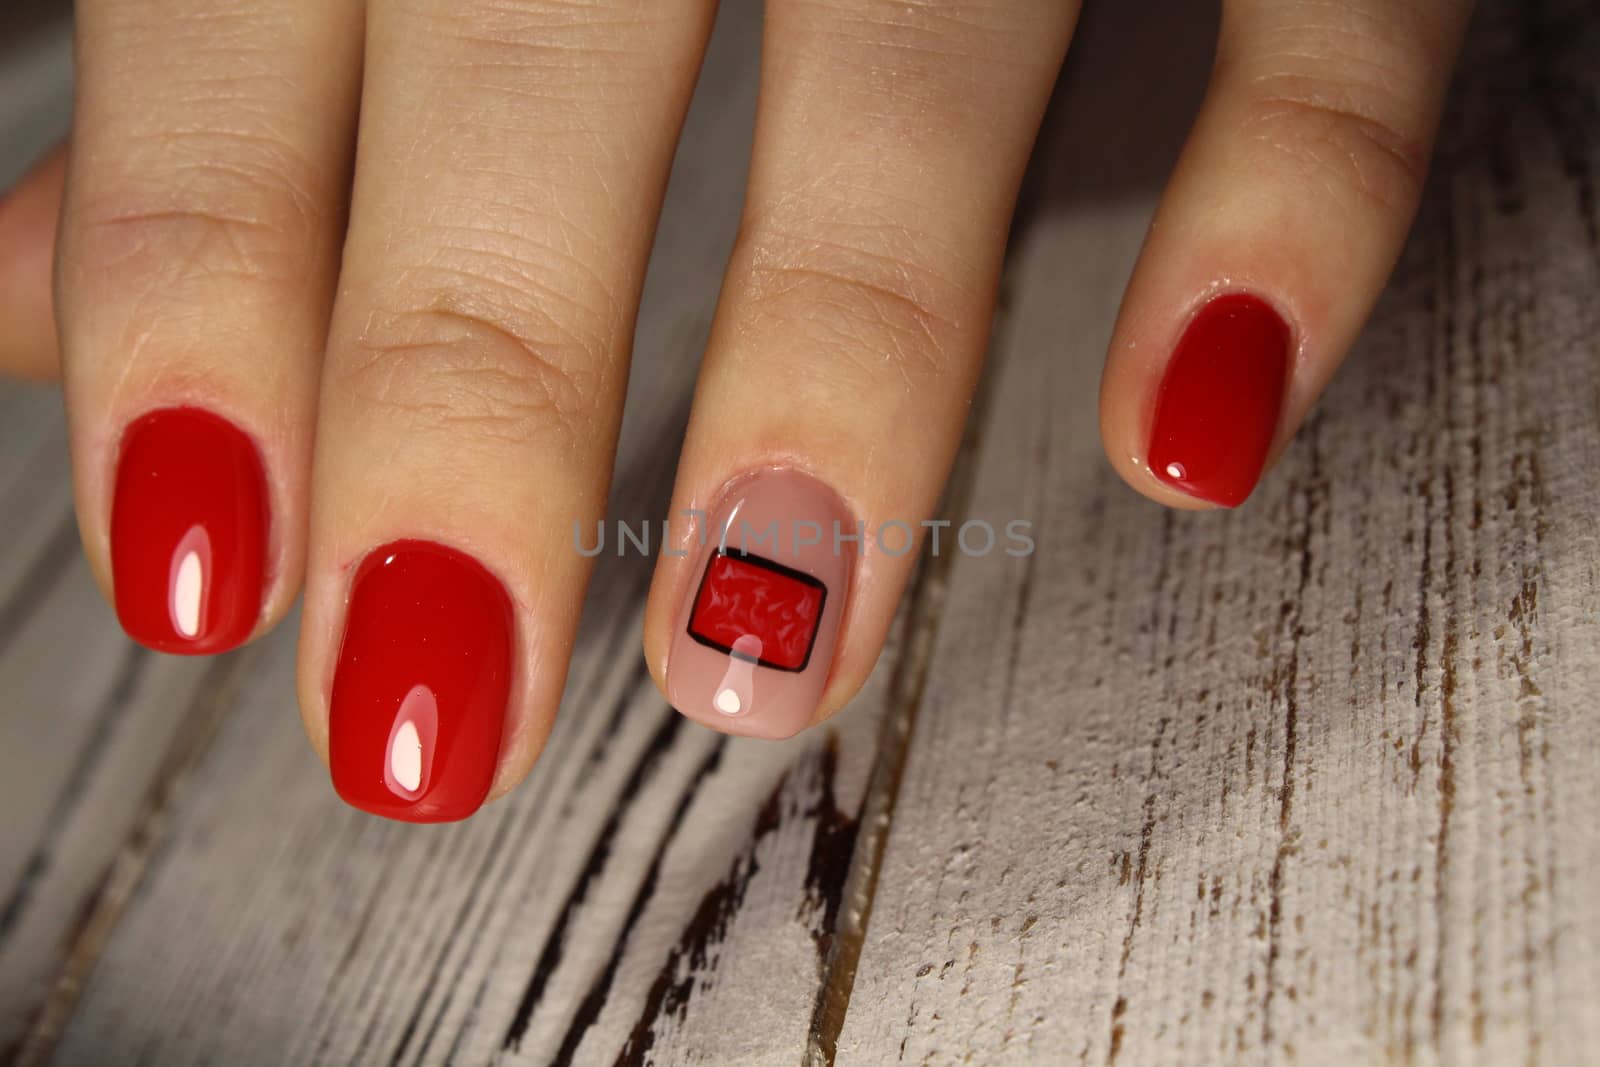 Manicure design nails by SmirMaxStock